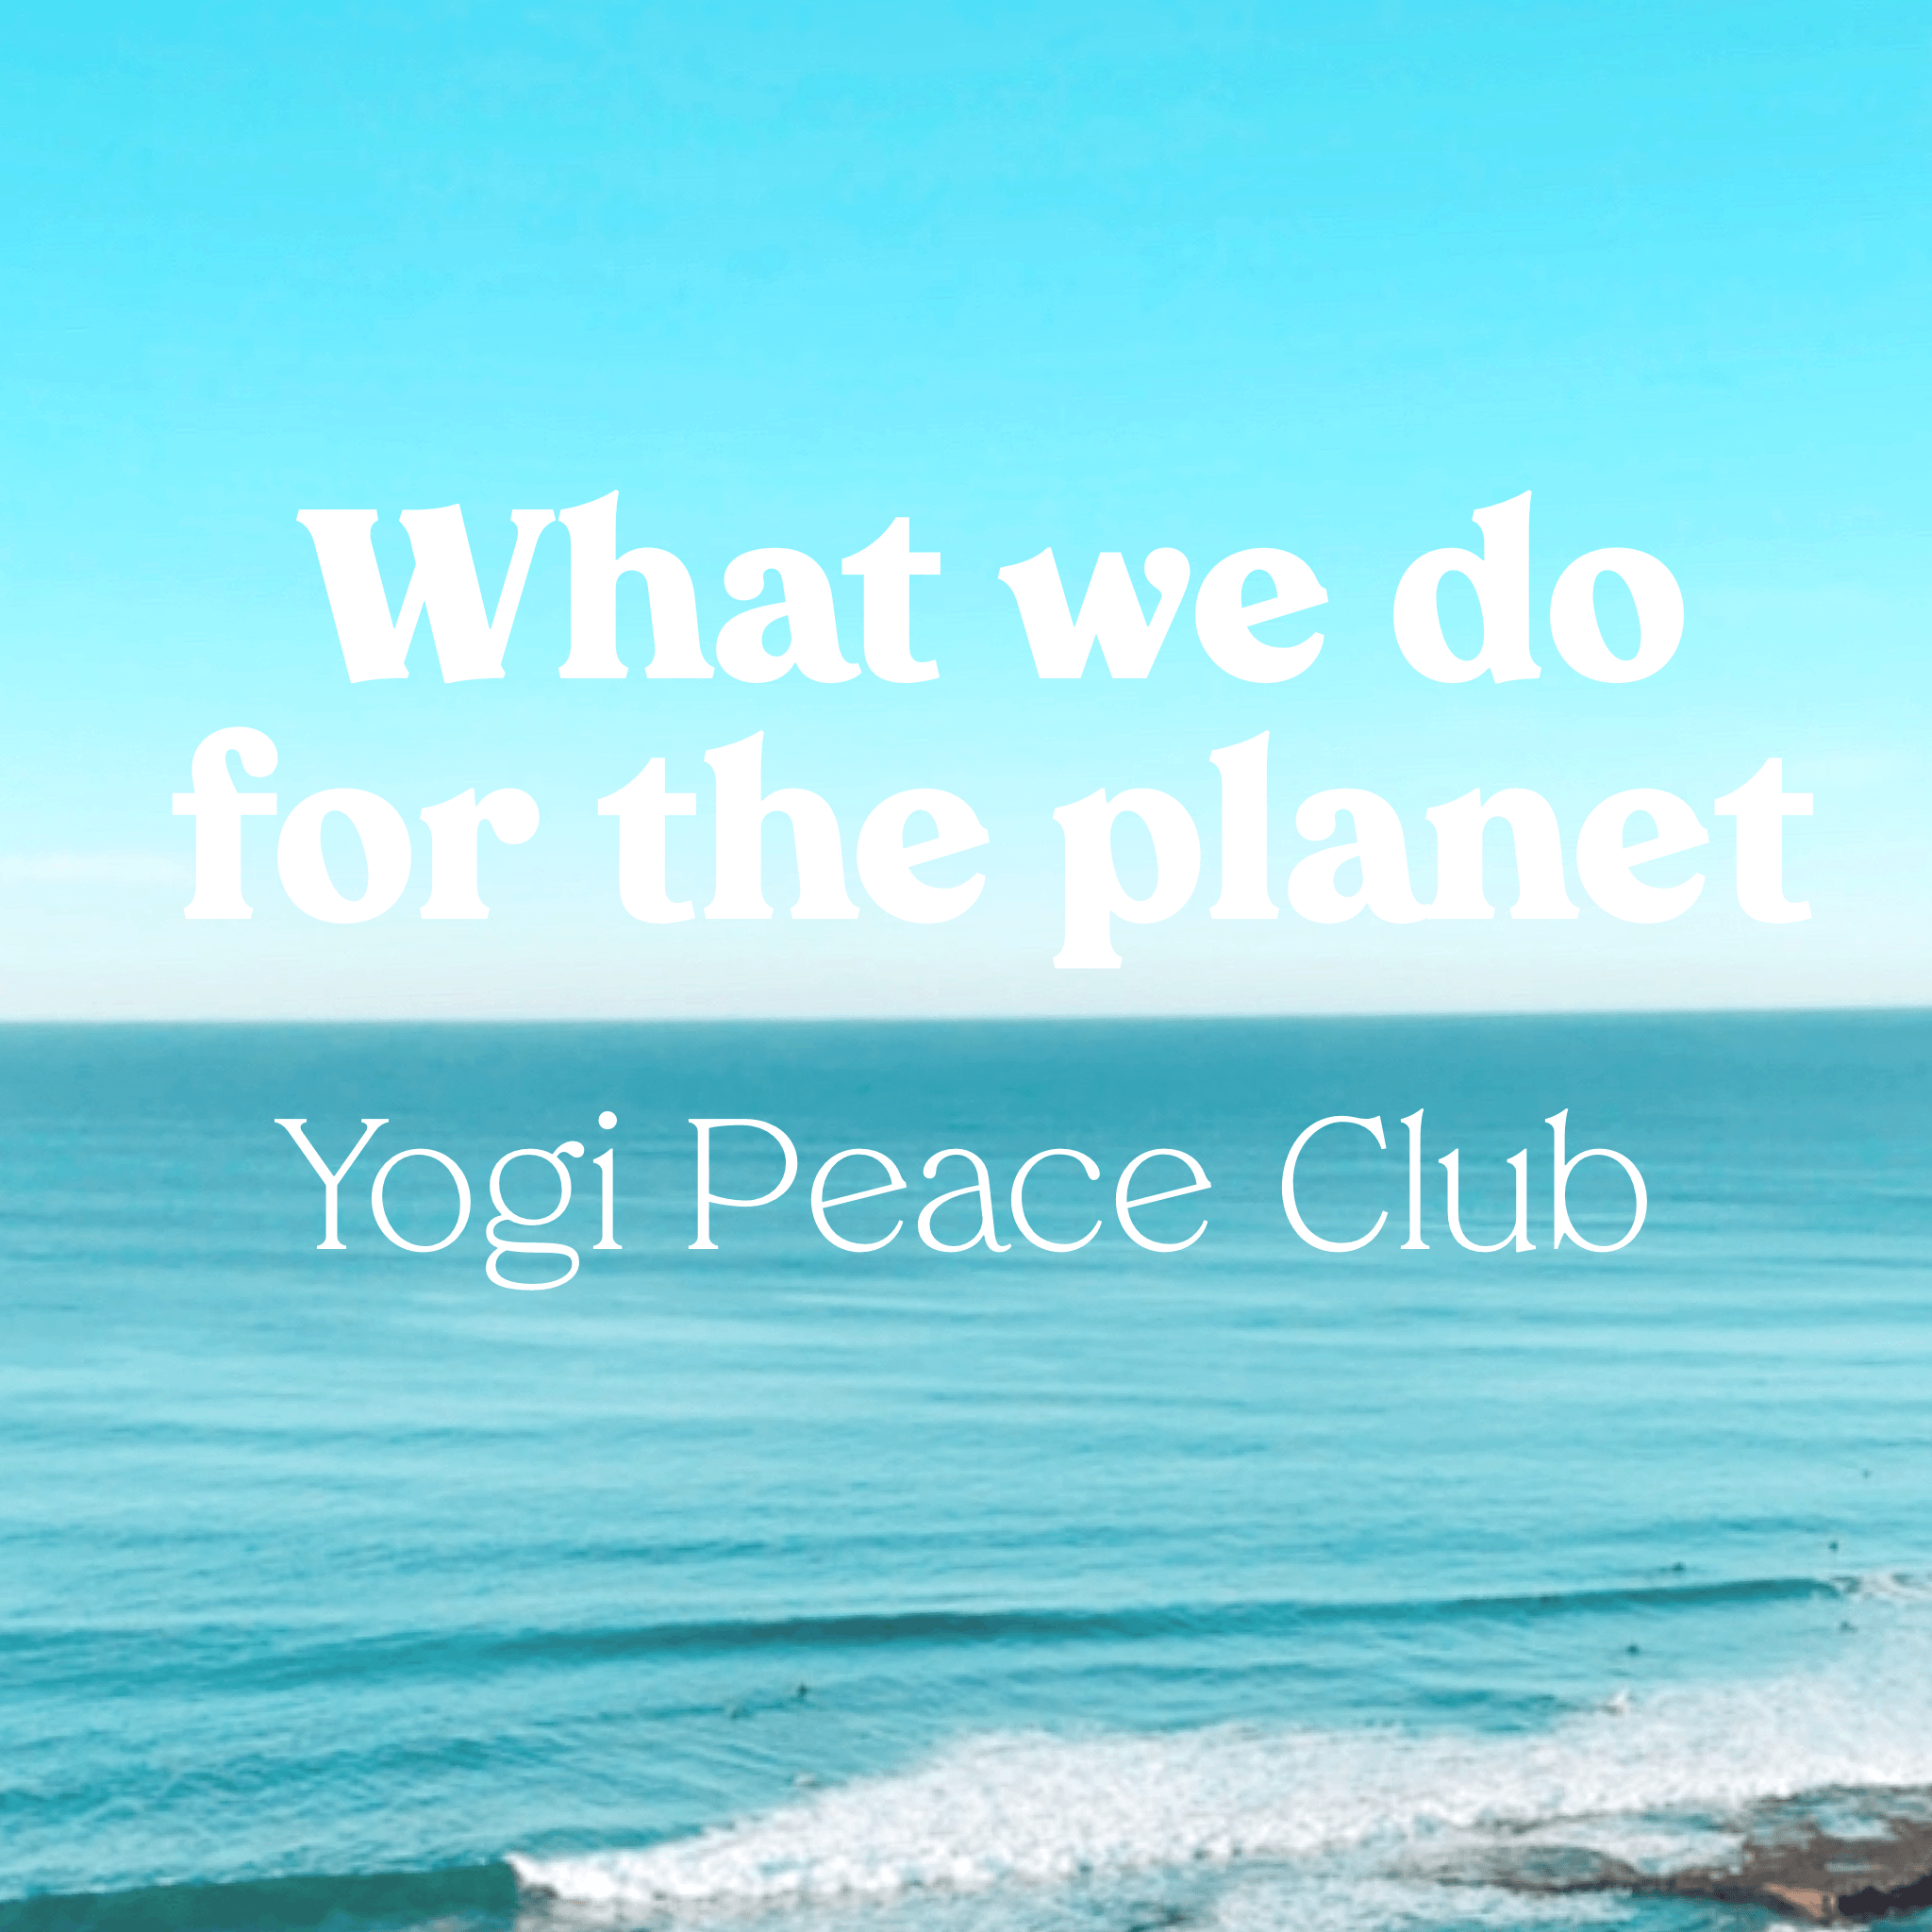 How we do our part for the planet - Yogi Peace Club